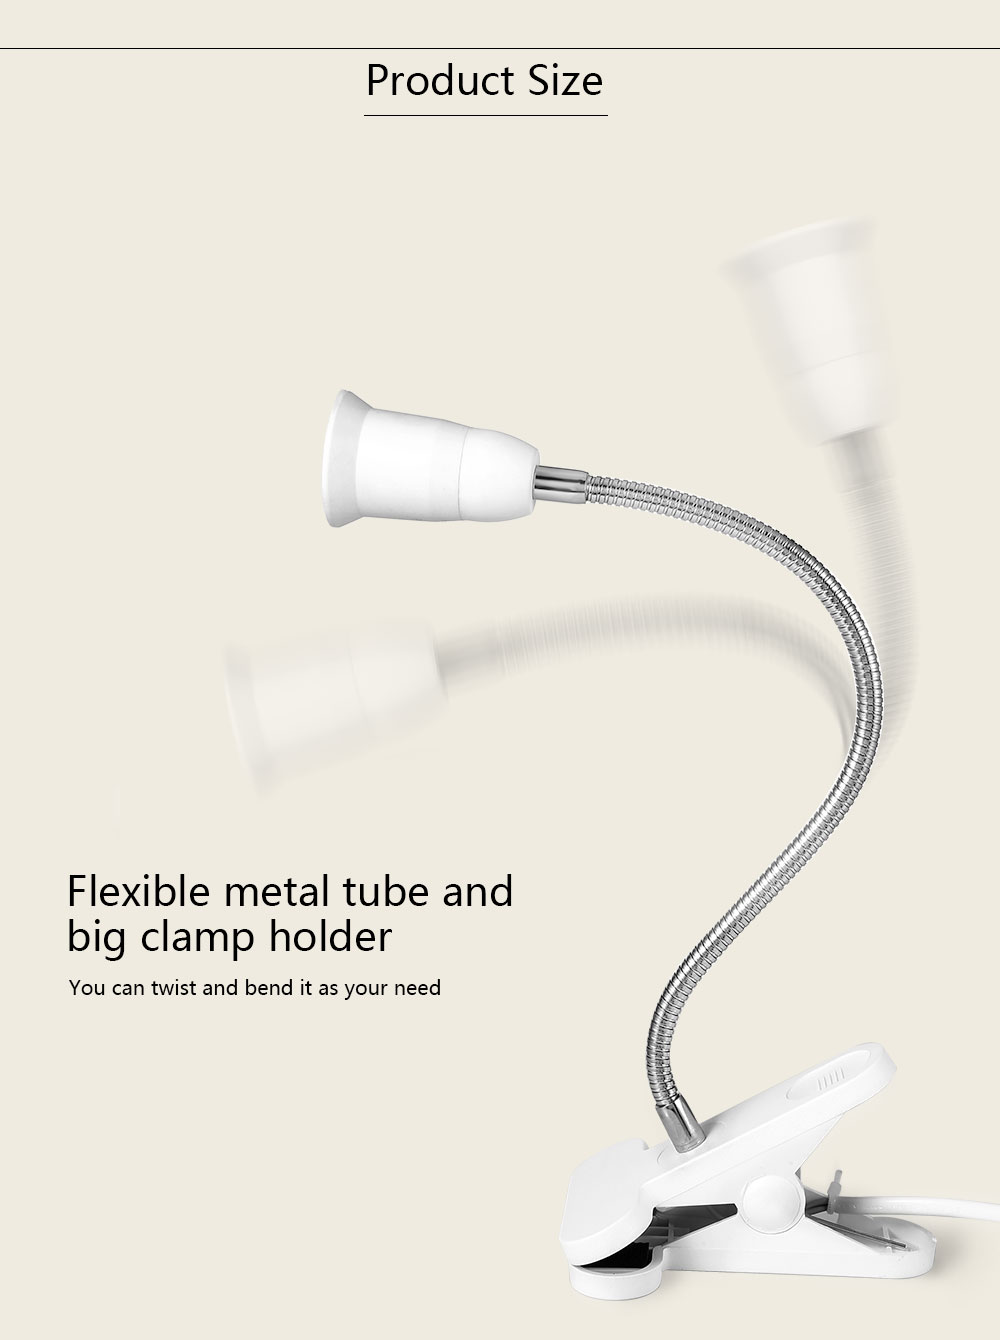 E27 Flexible Lamp Holder Adapter Bulb Socket Base with Clip